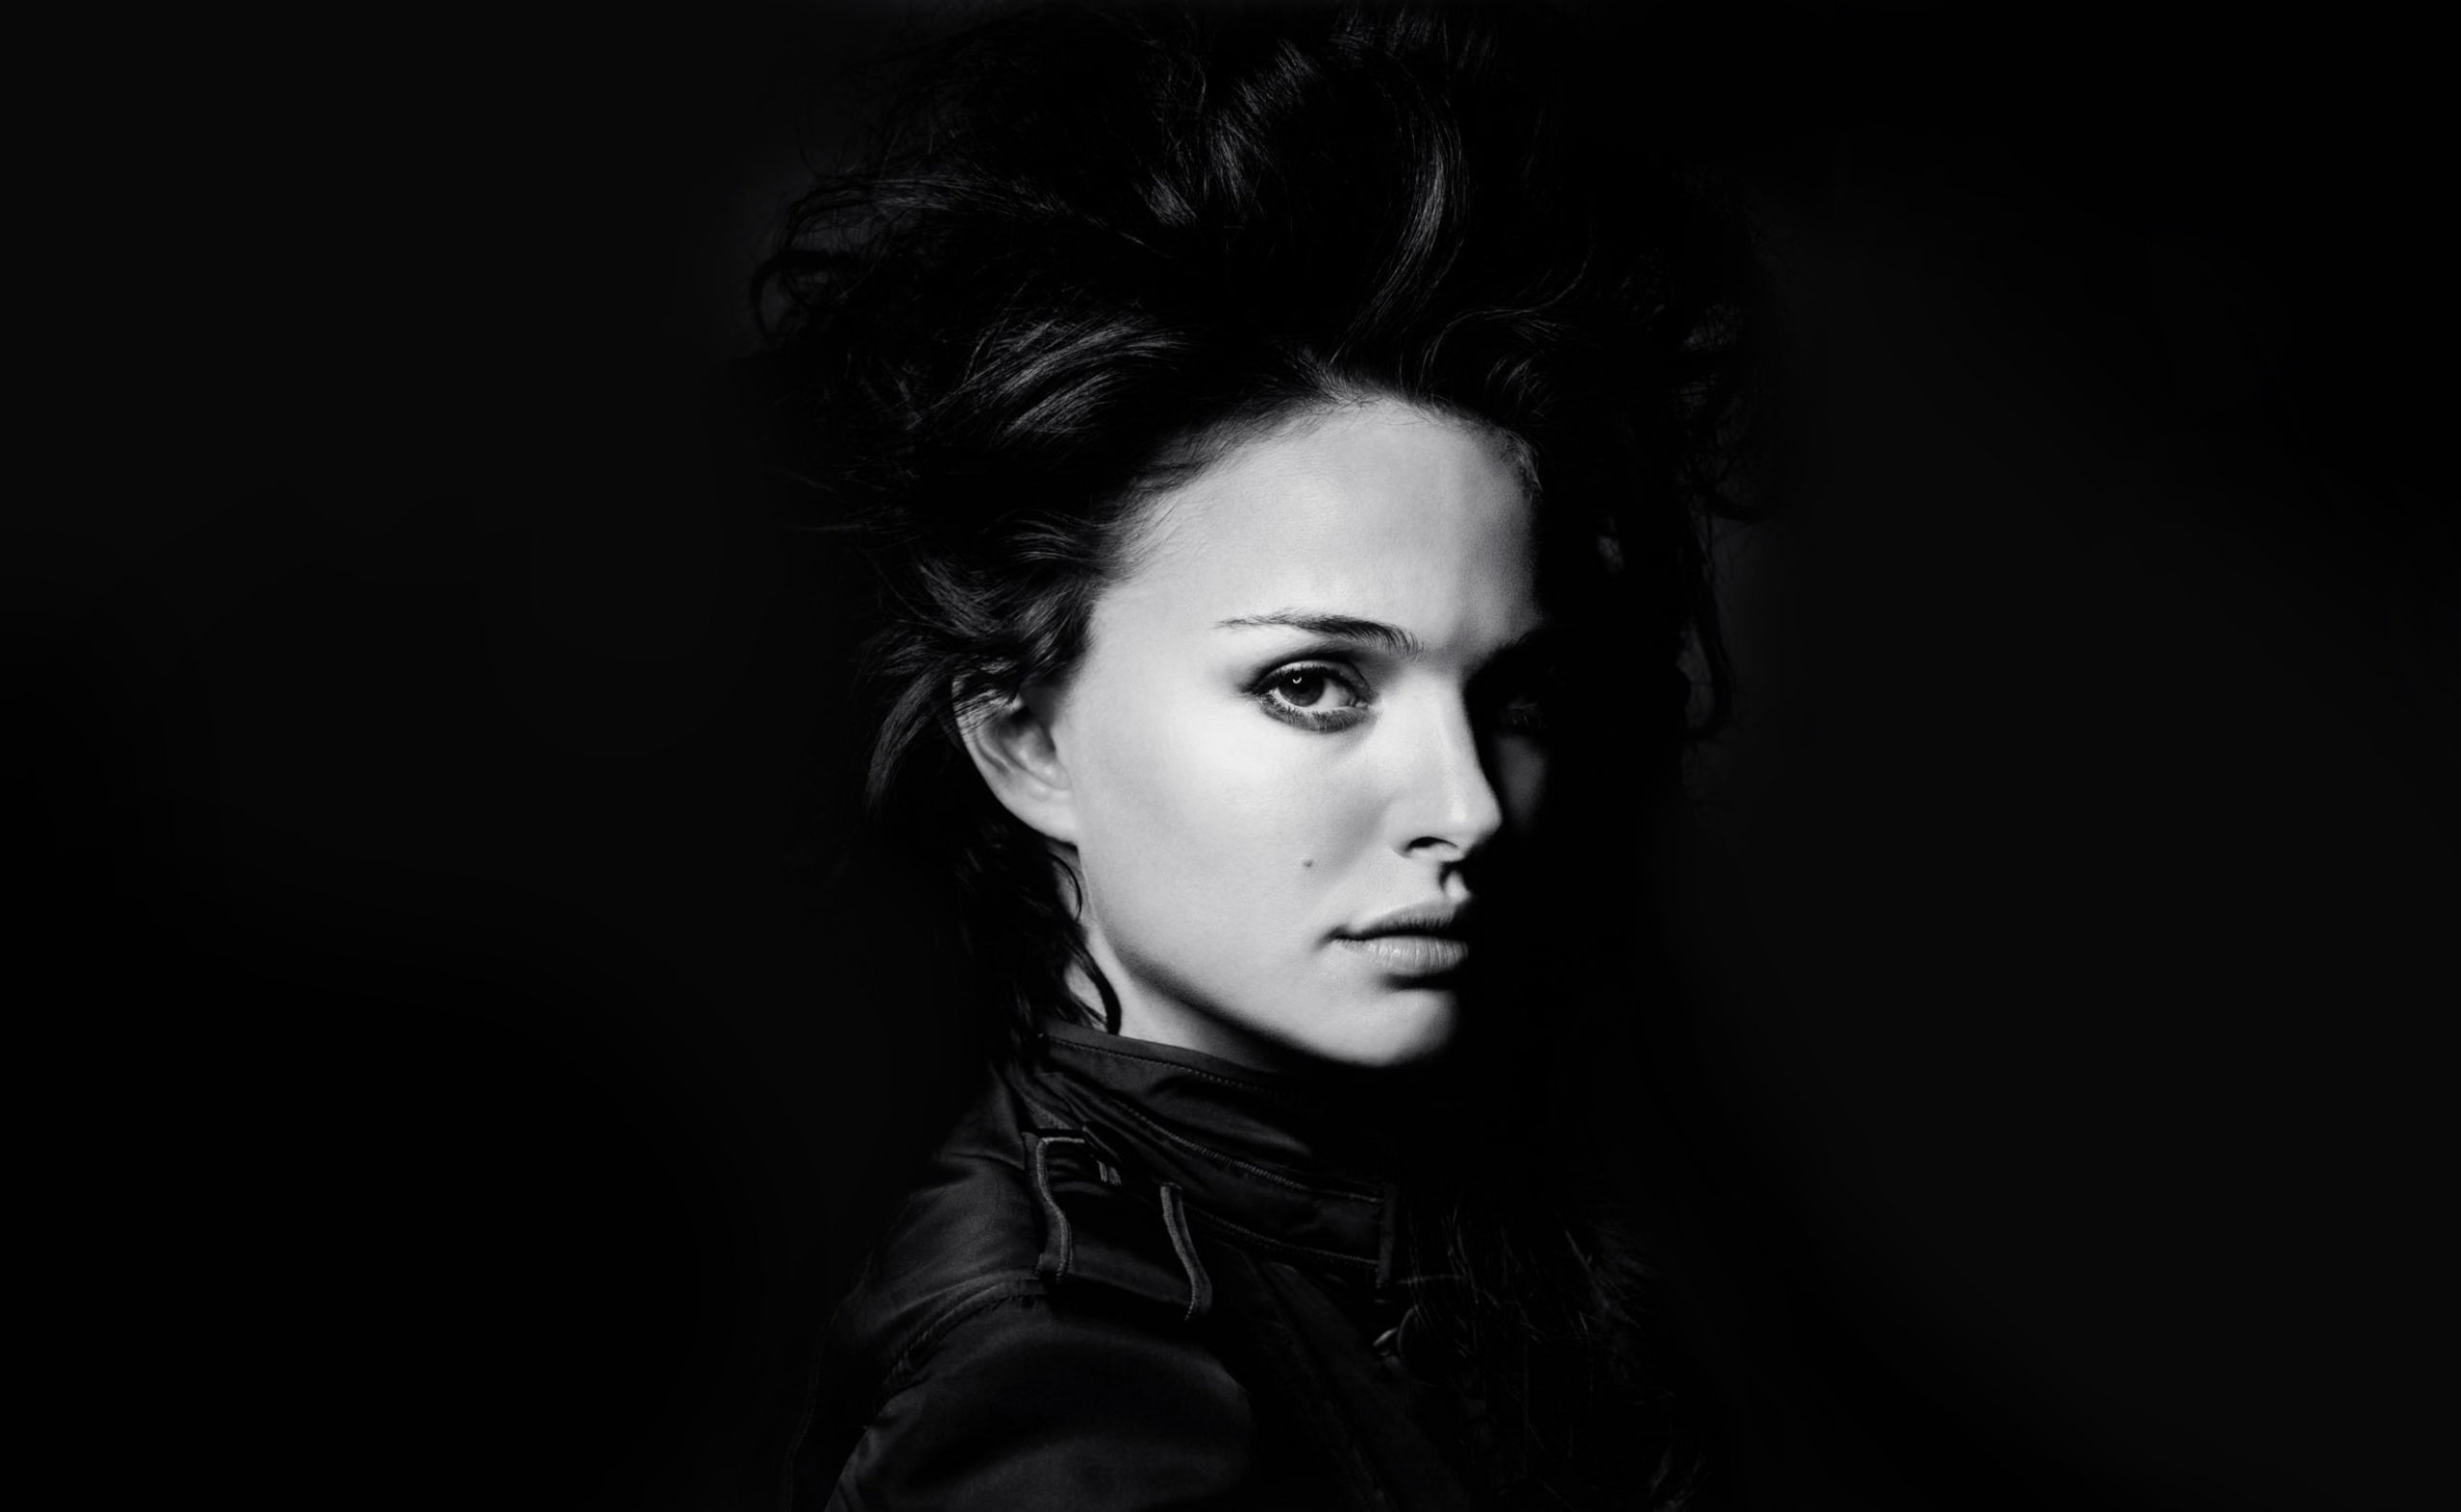 Natalie Portman Portrait, women's leather jacket, Black and White